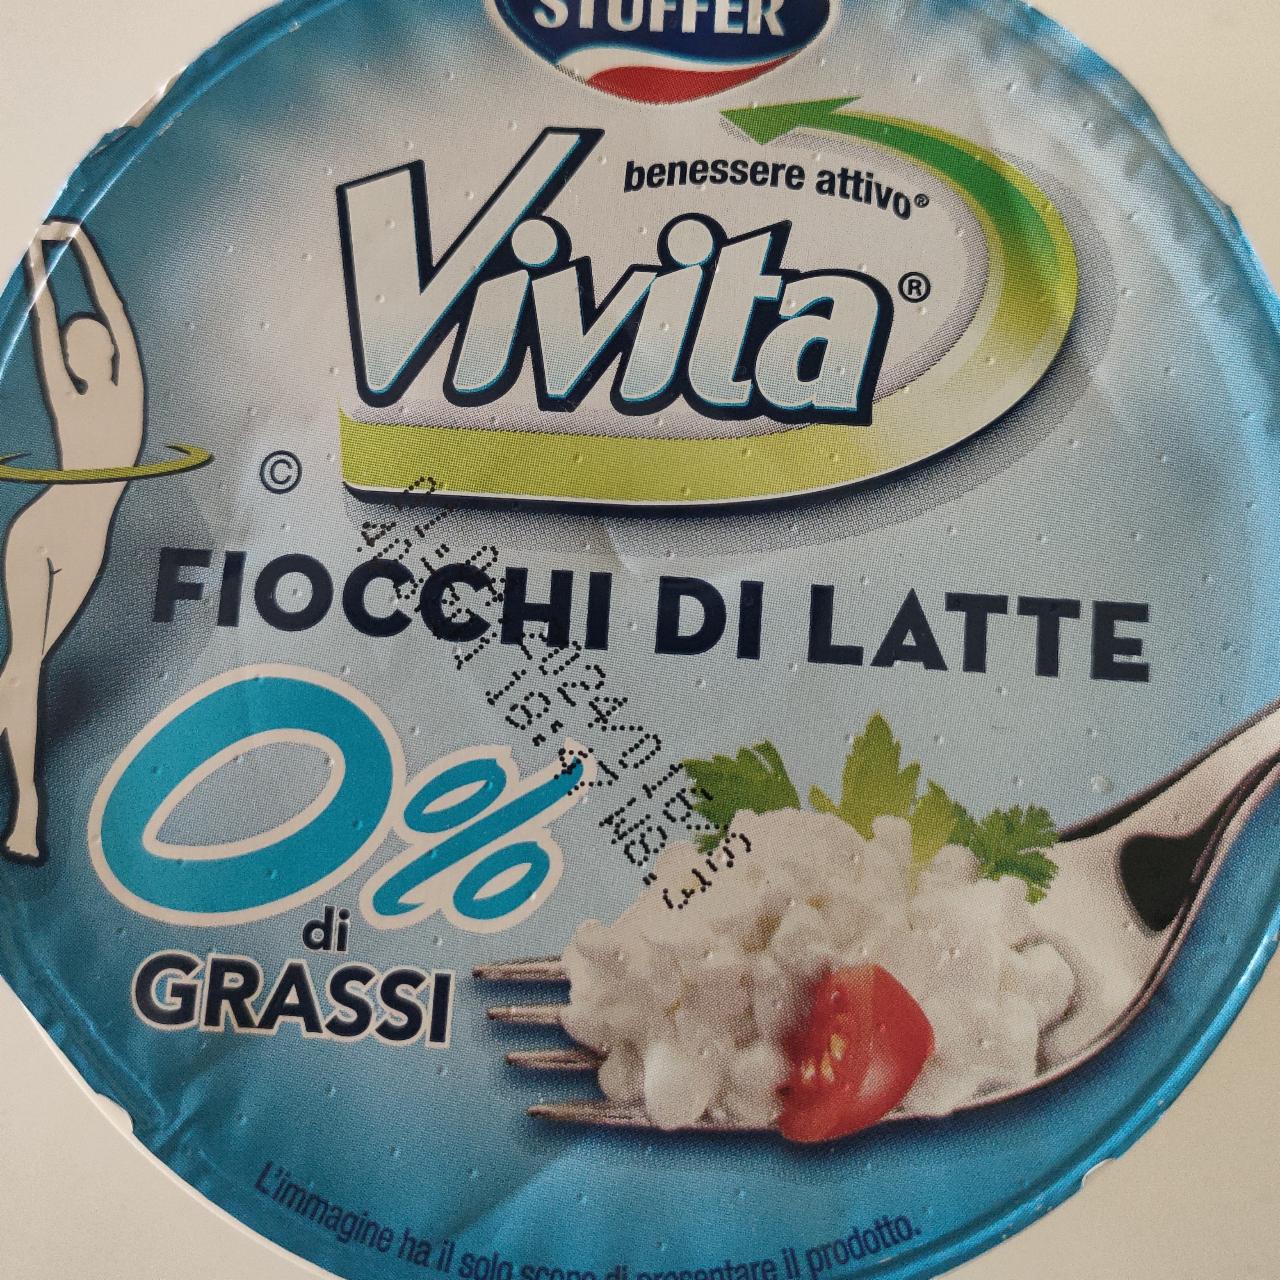 Fotografie - Vivita fiocchi di latte 0% Stuffer